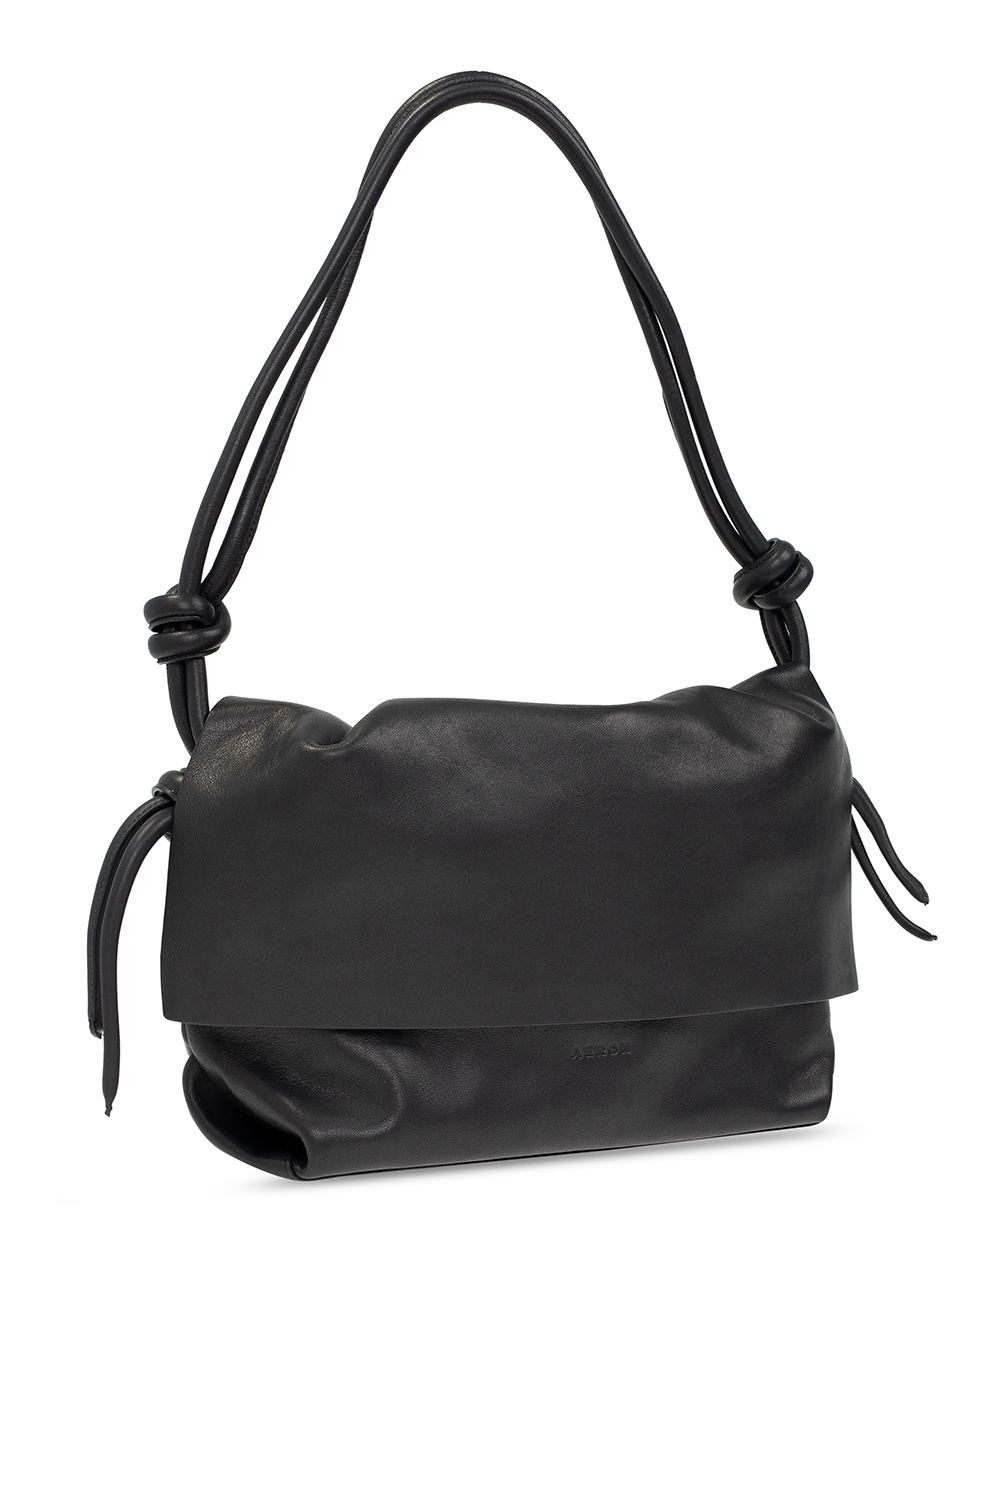 Aeron ‘Harriet Medium’ hobo shoulder bag